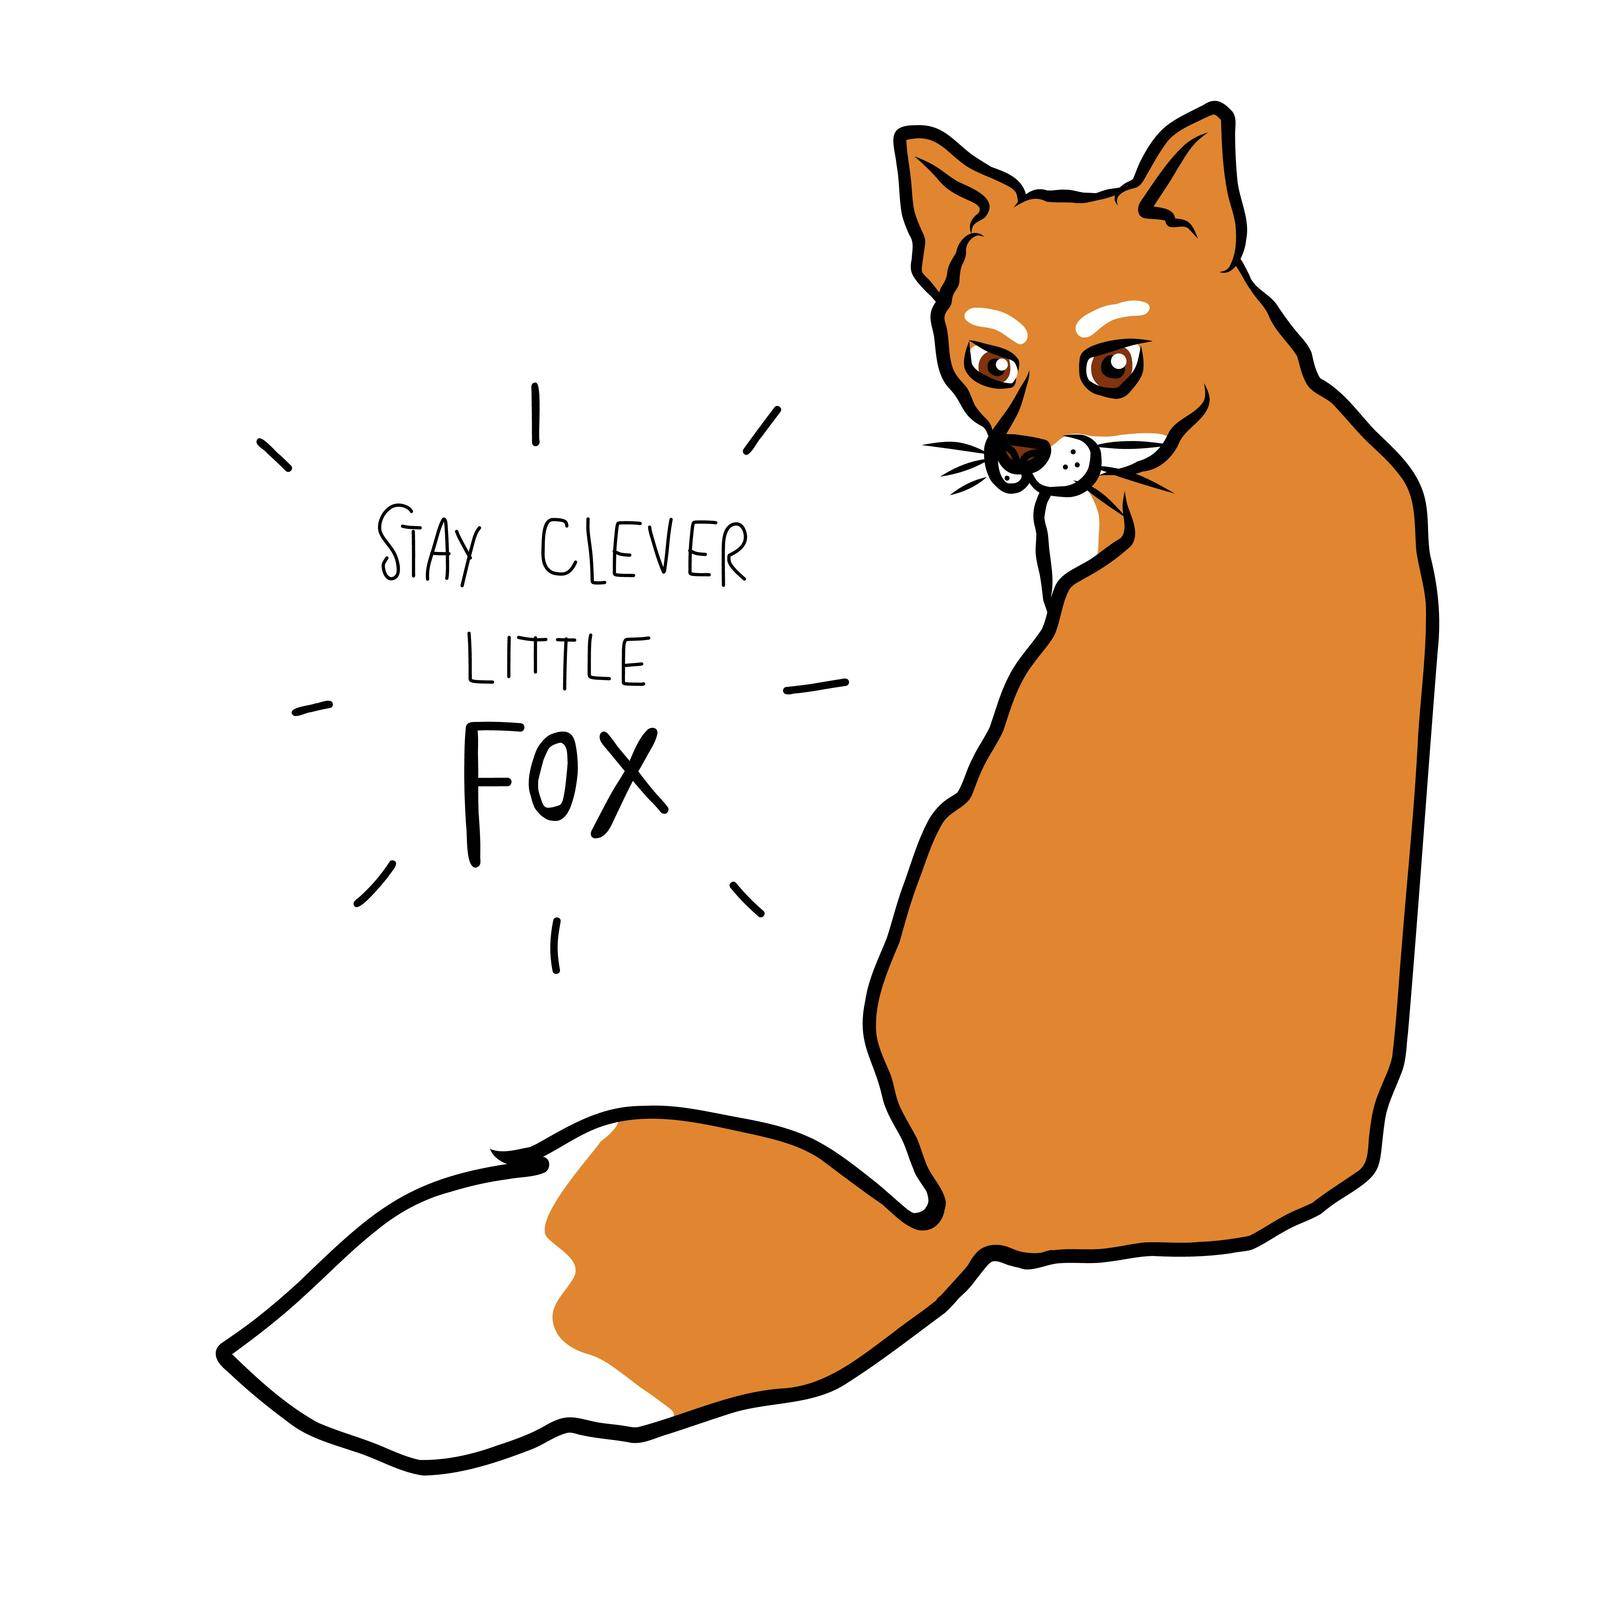 Stay clever little fox cartoon vector illustration